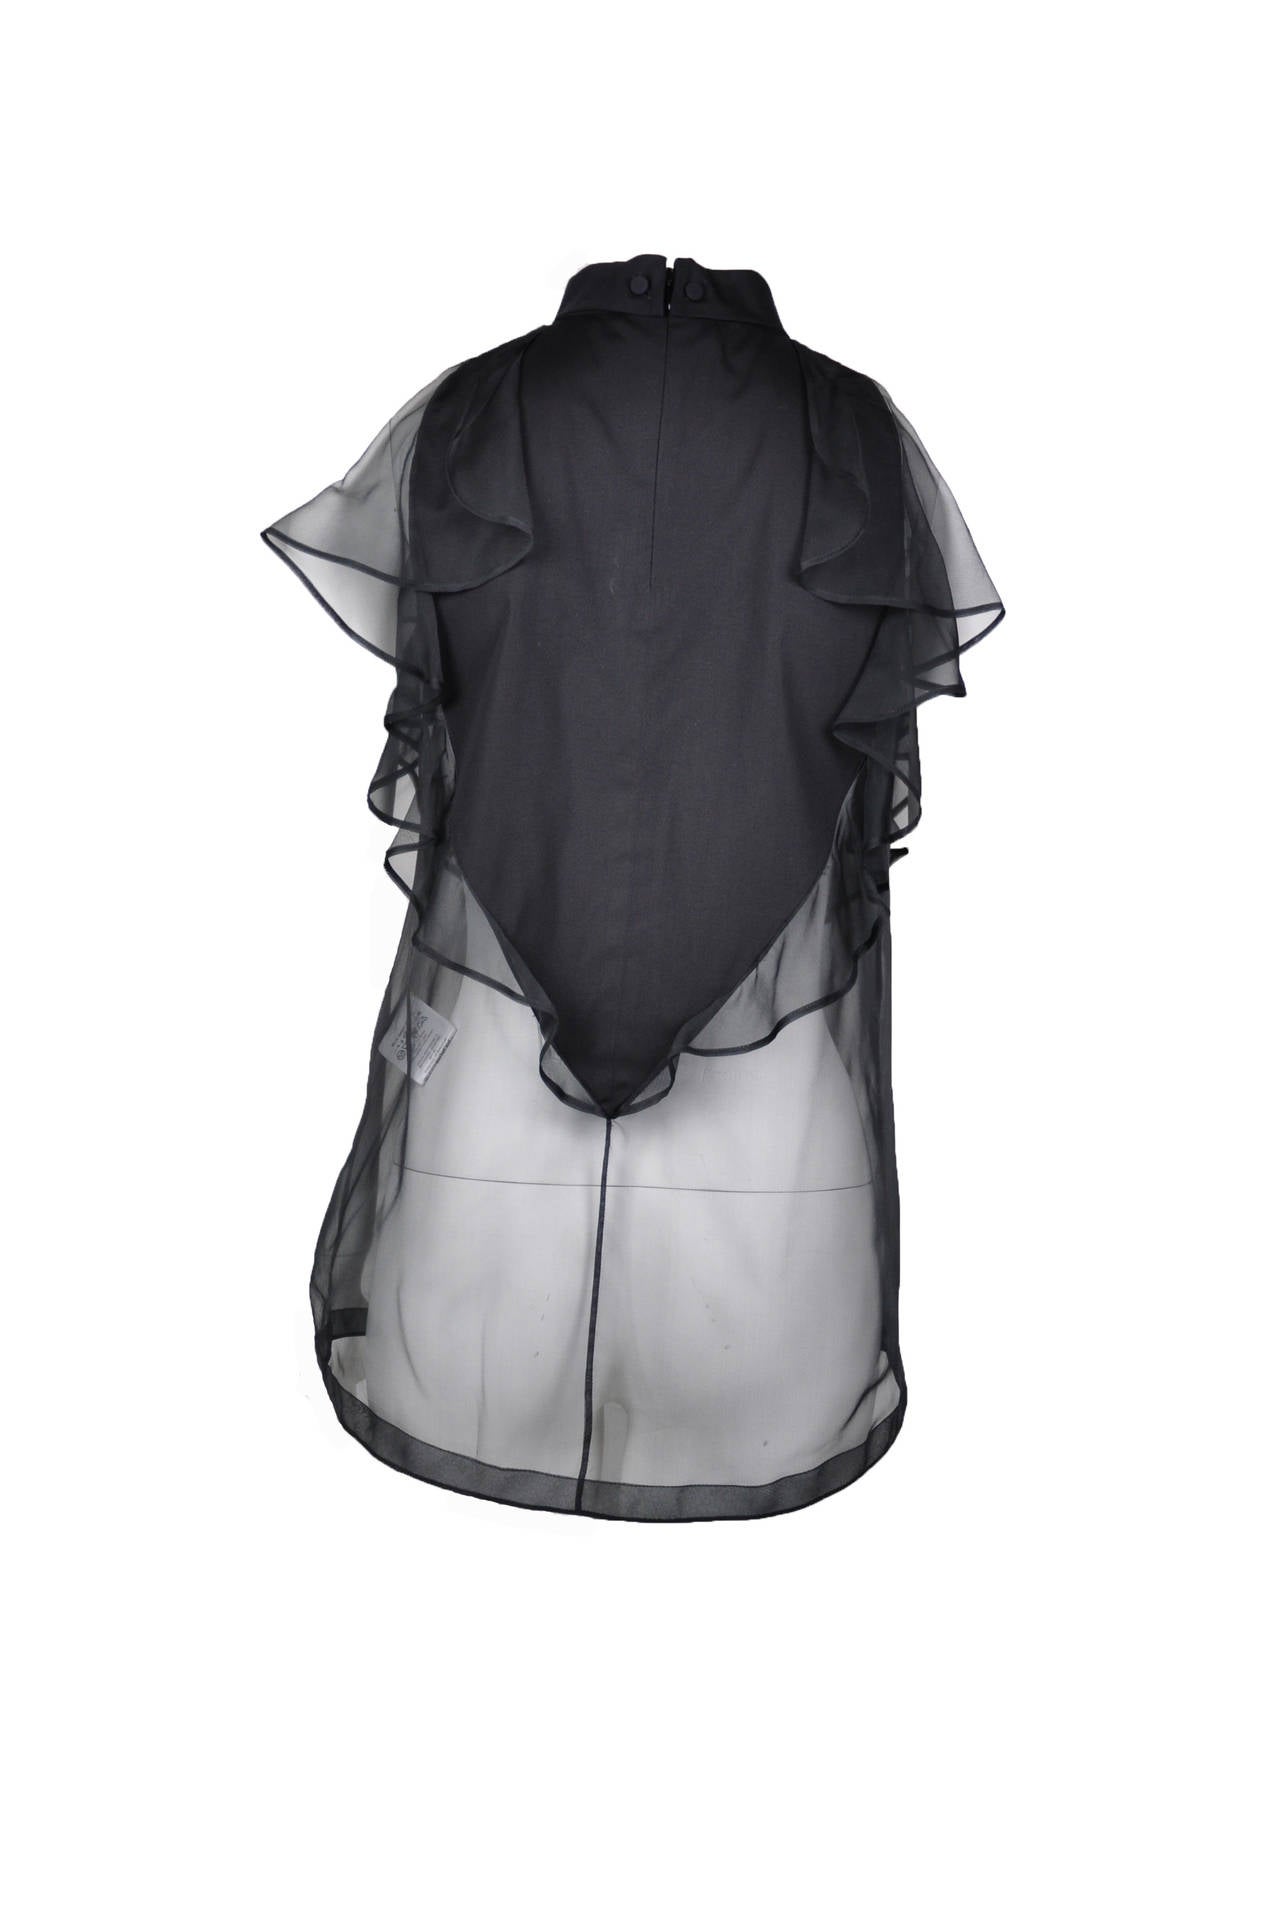 Givenchy High Neck Black Ruffled Cotton Sheer Top In New Condition In Hong Kong, Hong Kong